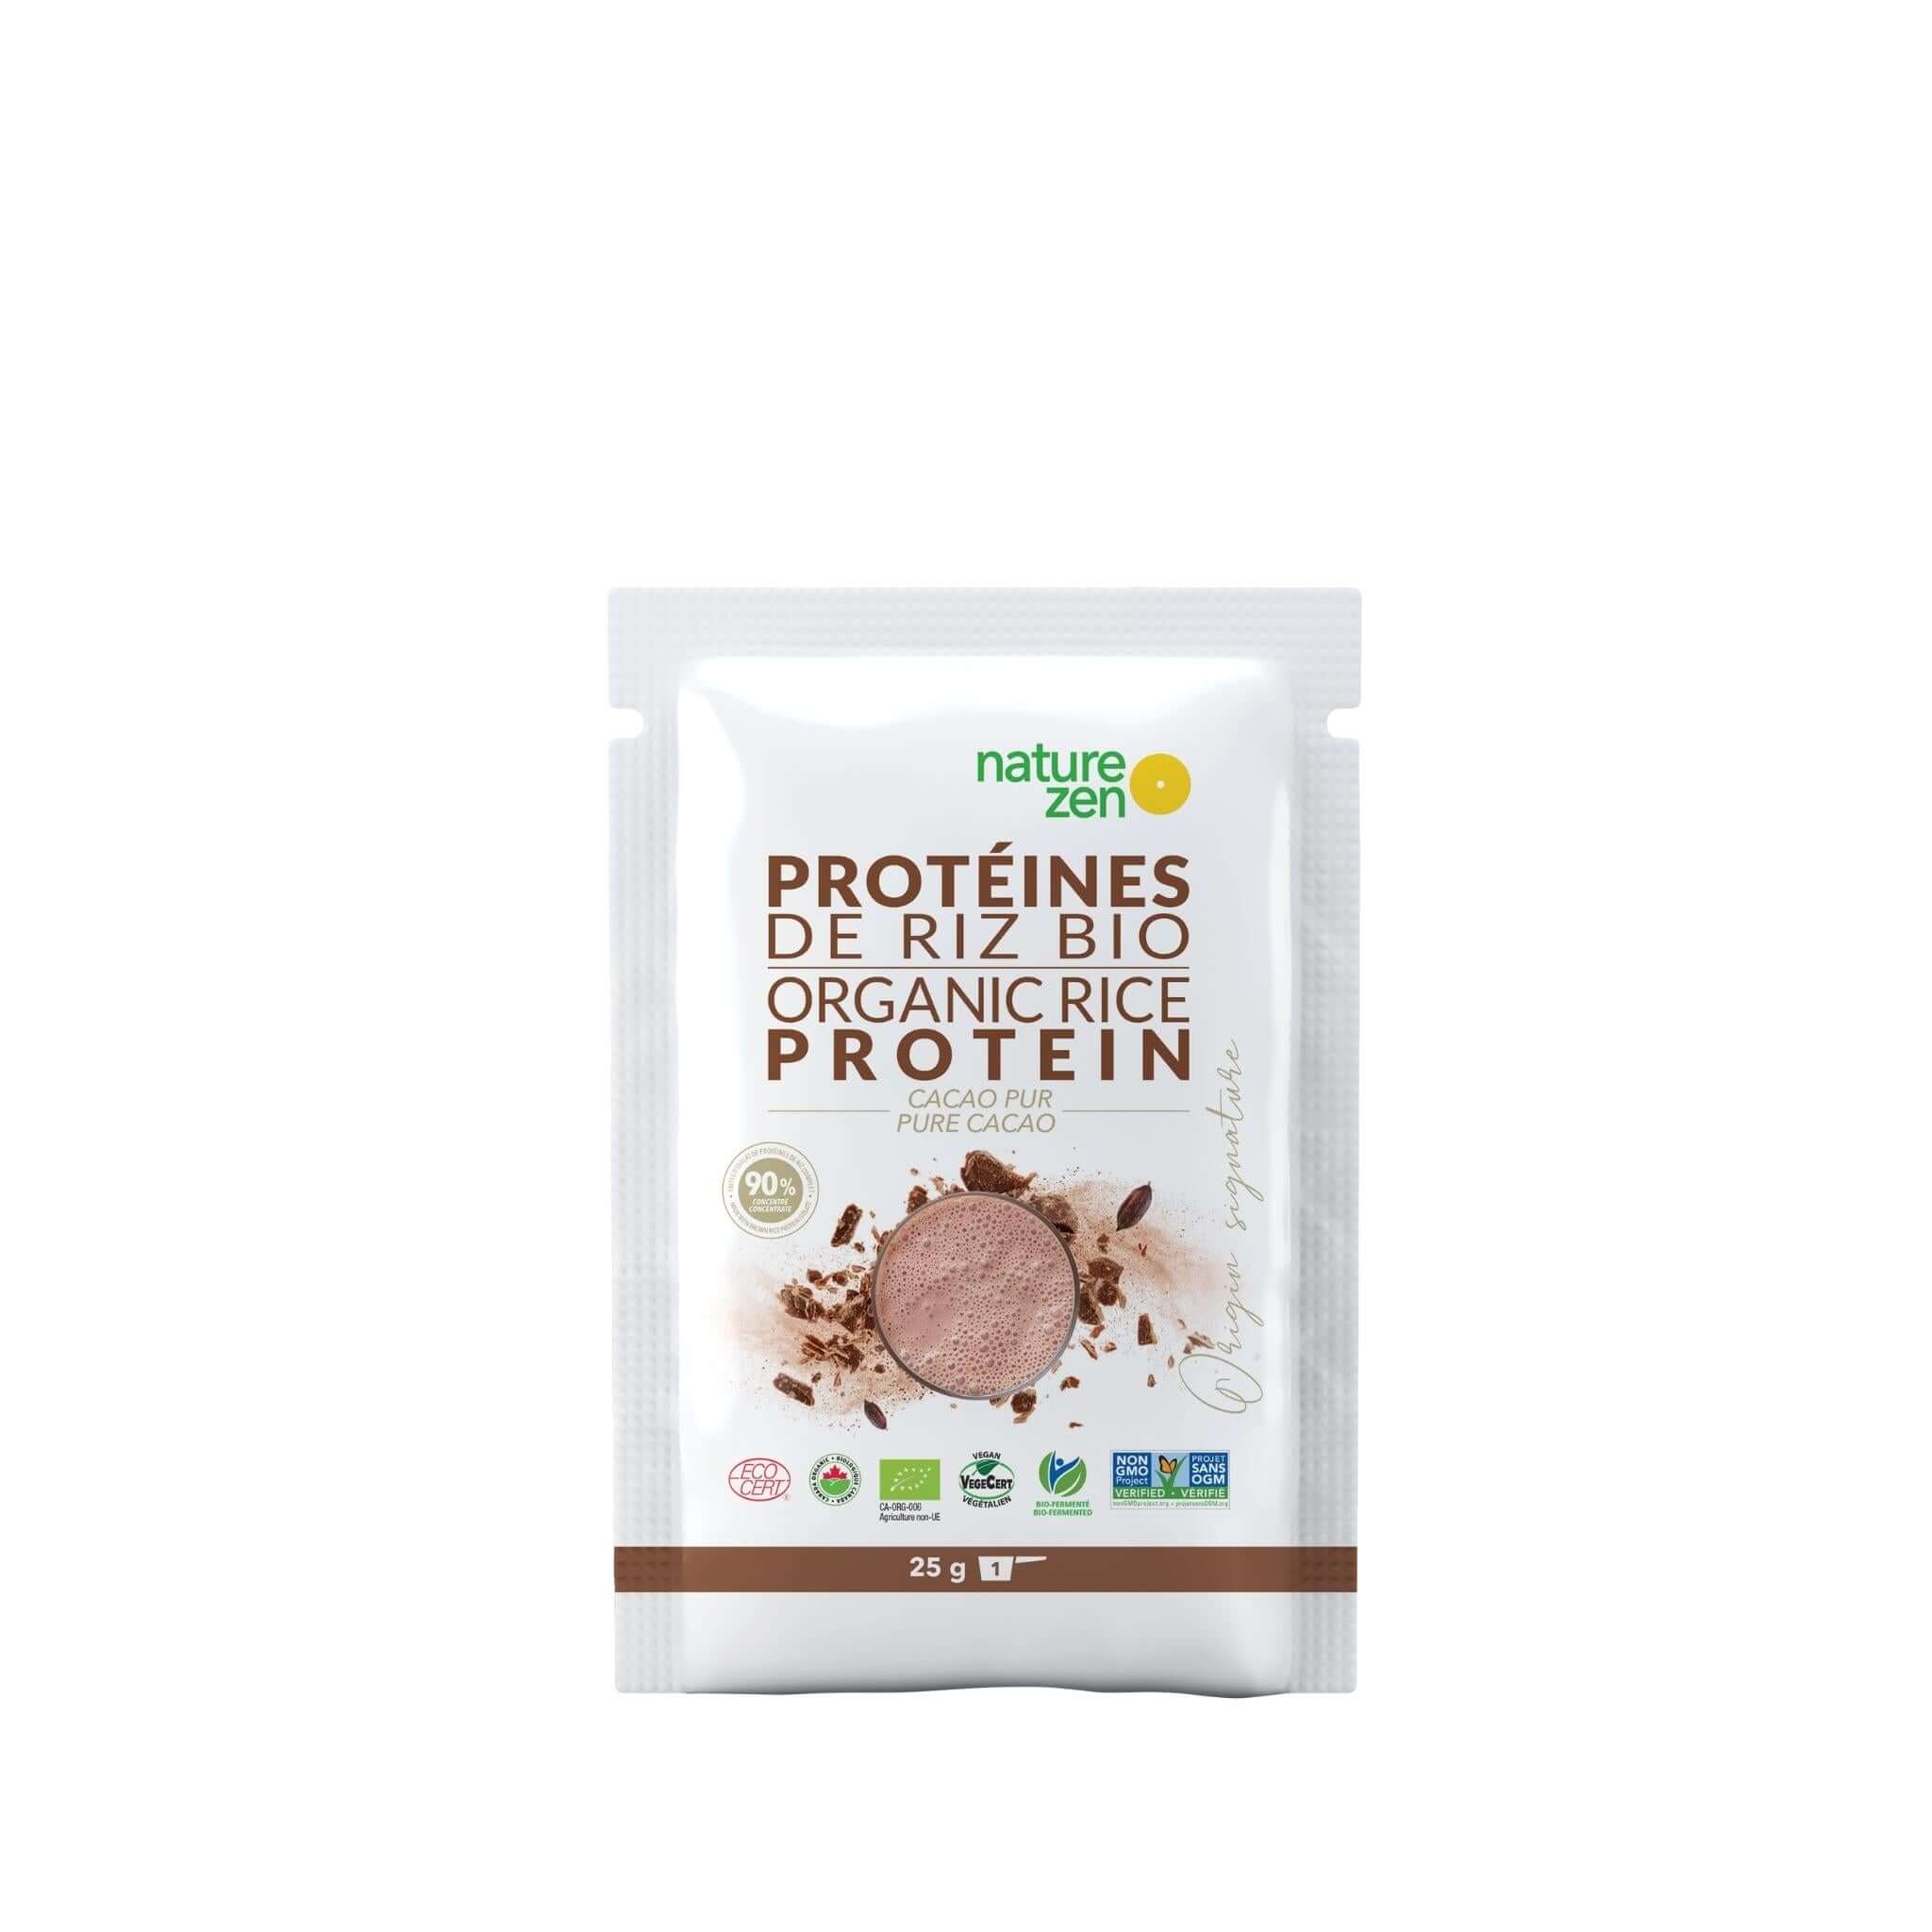 Nature Zen Origin - Organic Rice Protein Powder - Cacao (454g) mockup